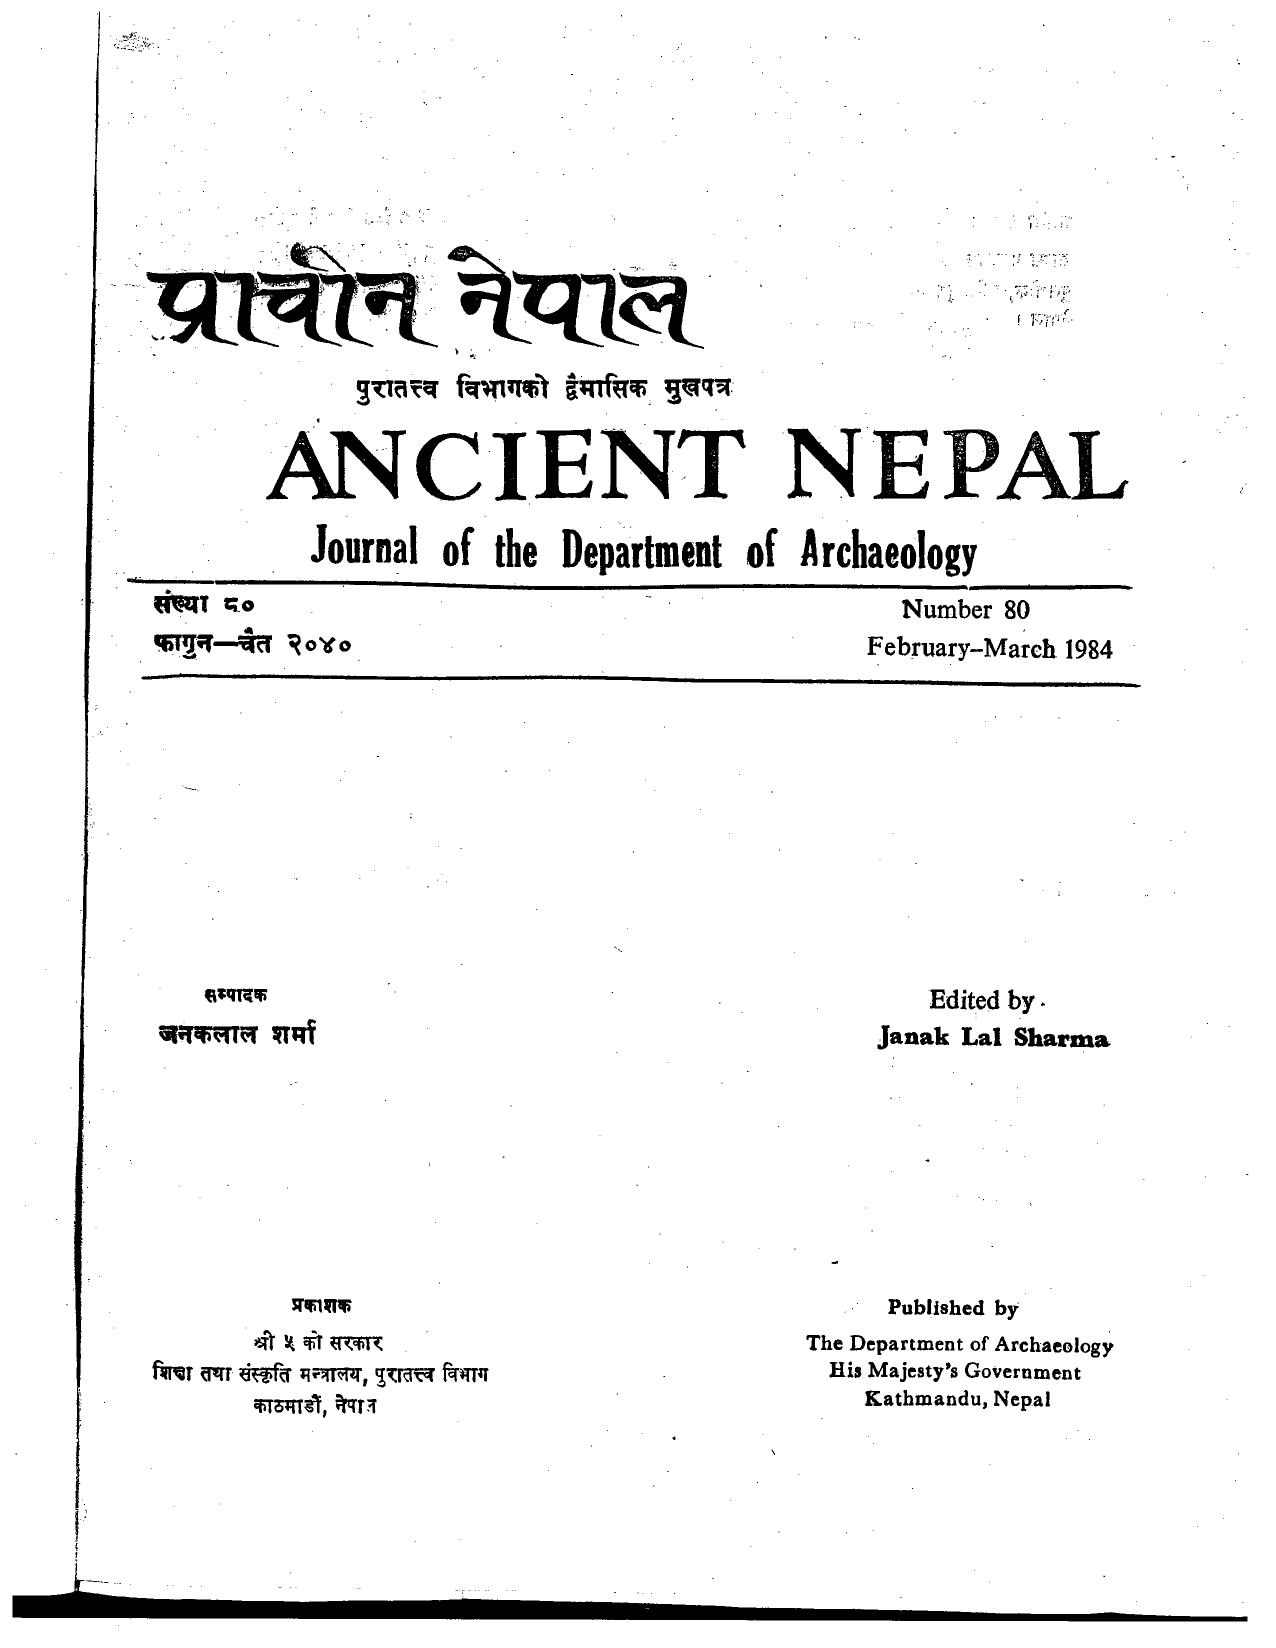 Ancient Nepal 80